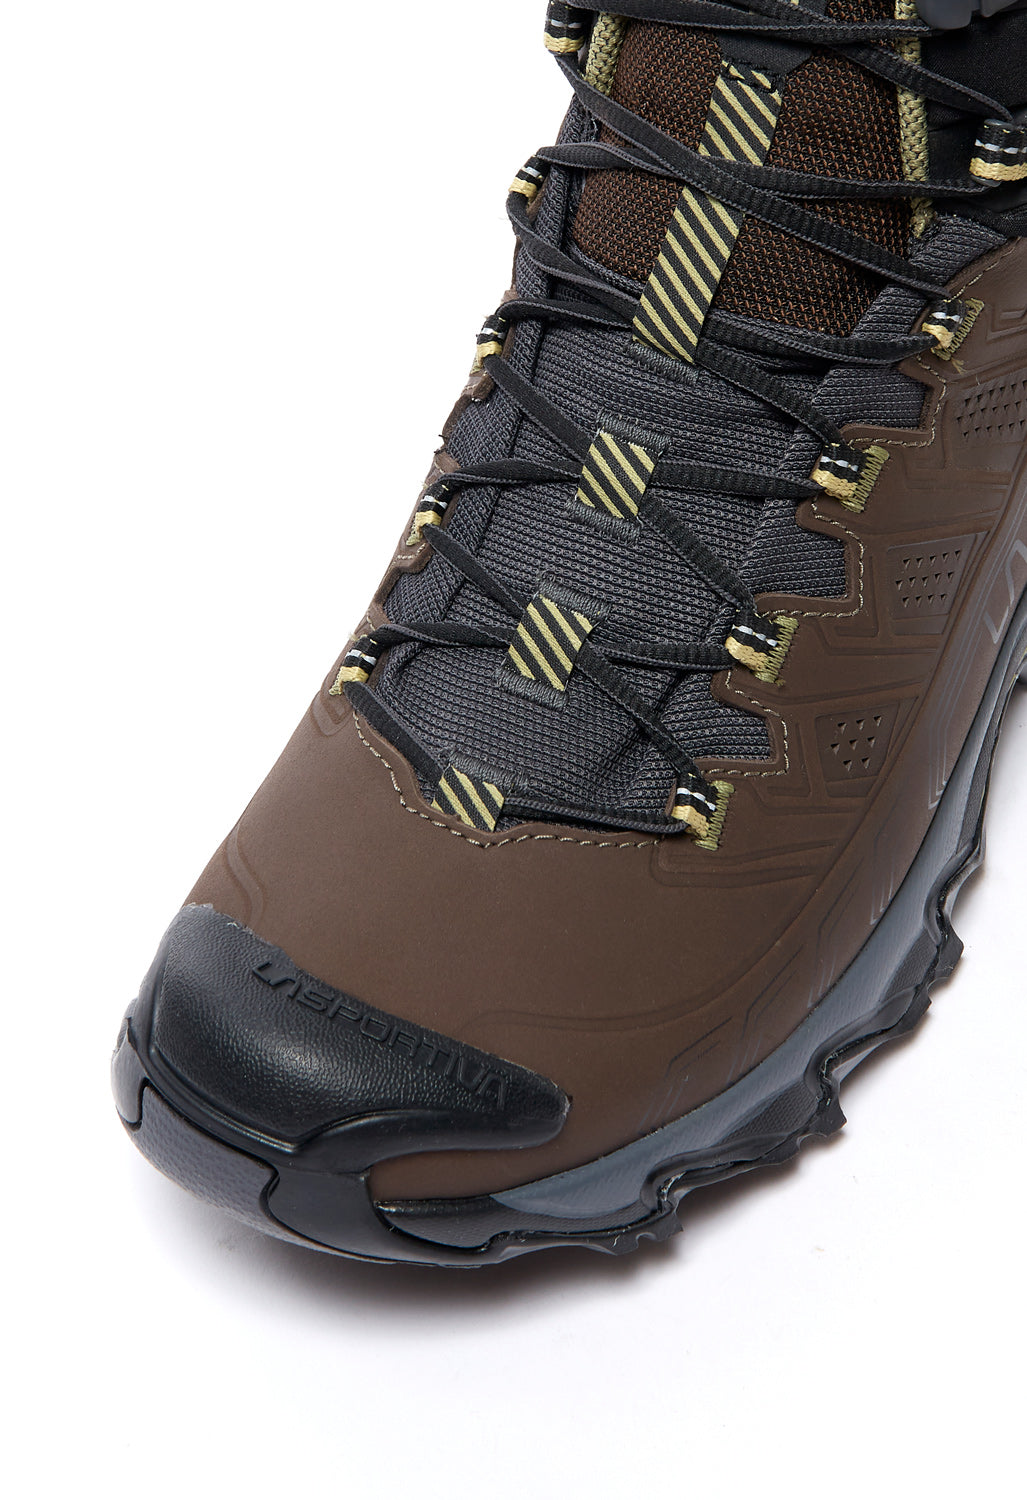 La Sportiva Ultra Raptor II Leather Mid GORE-TEX Men's Boots - Chocolate/Cedar